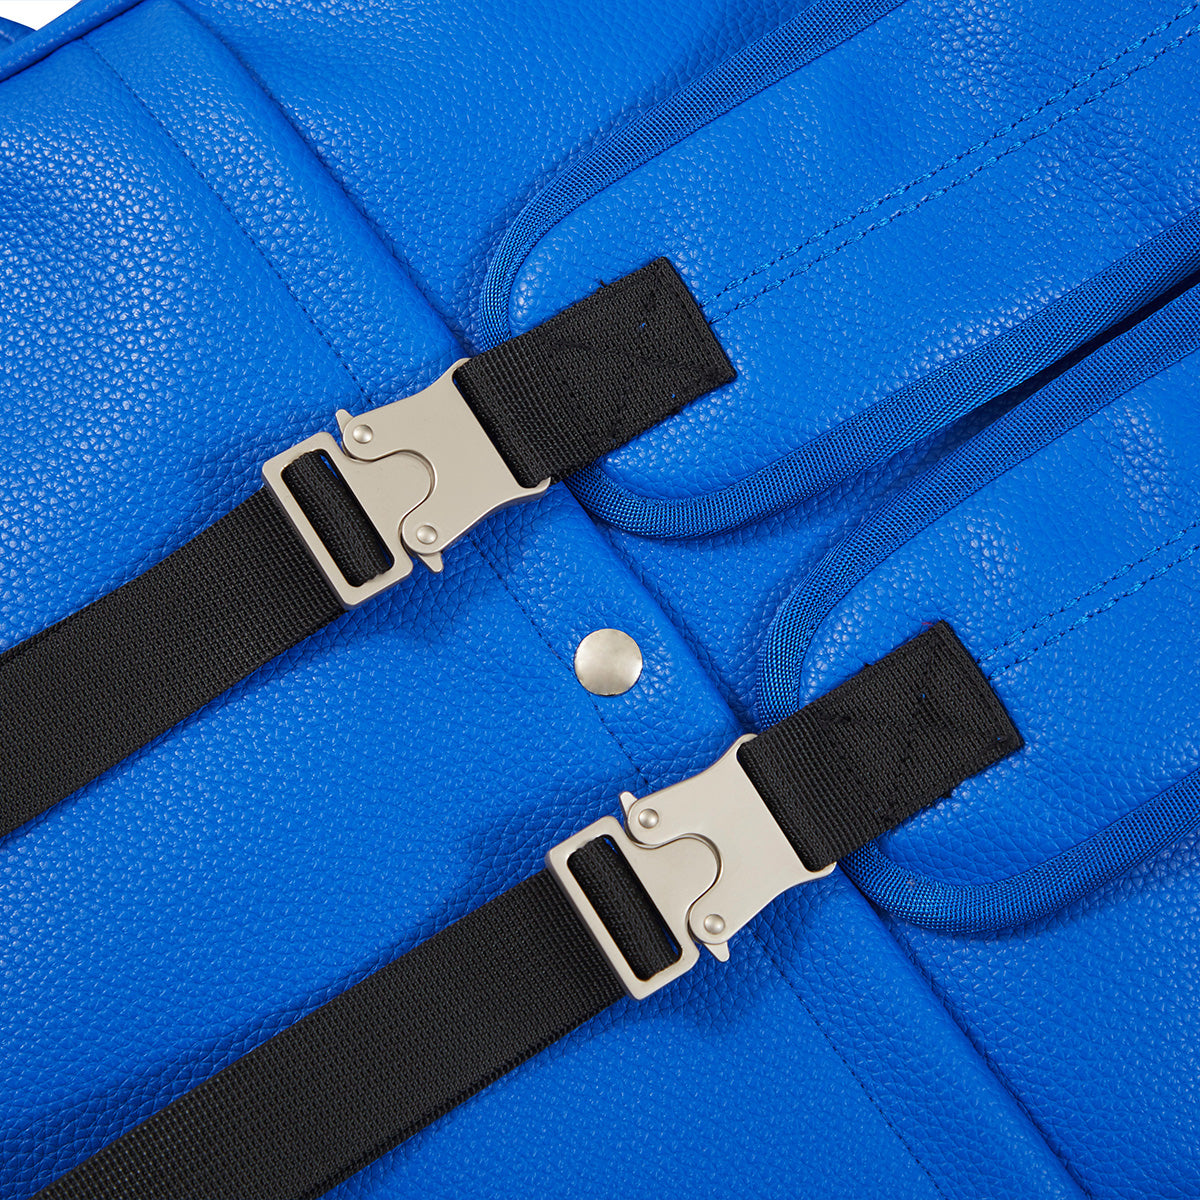 Kakazzy Leather Bag Blue